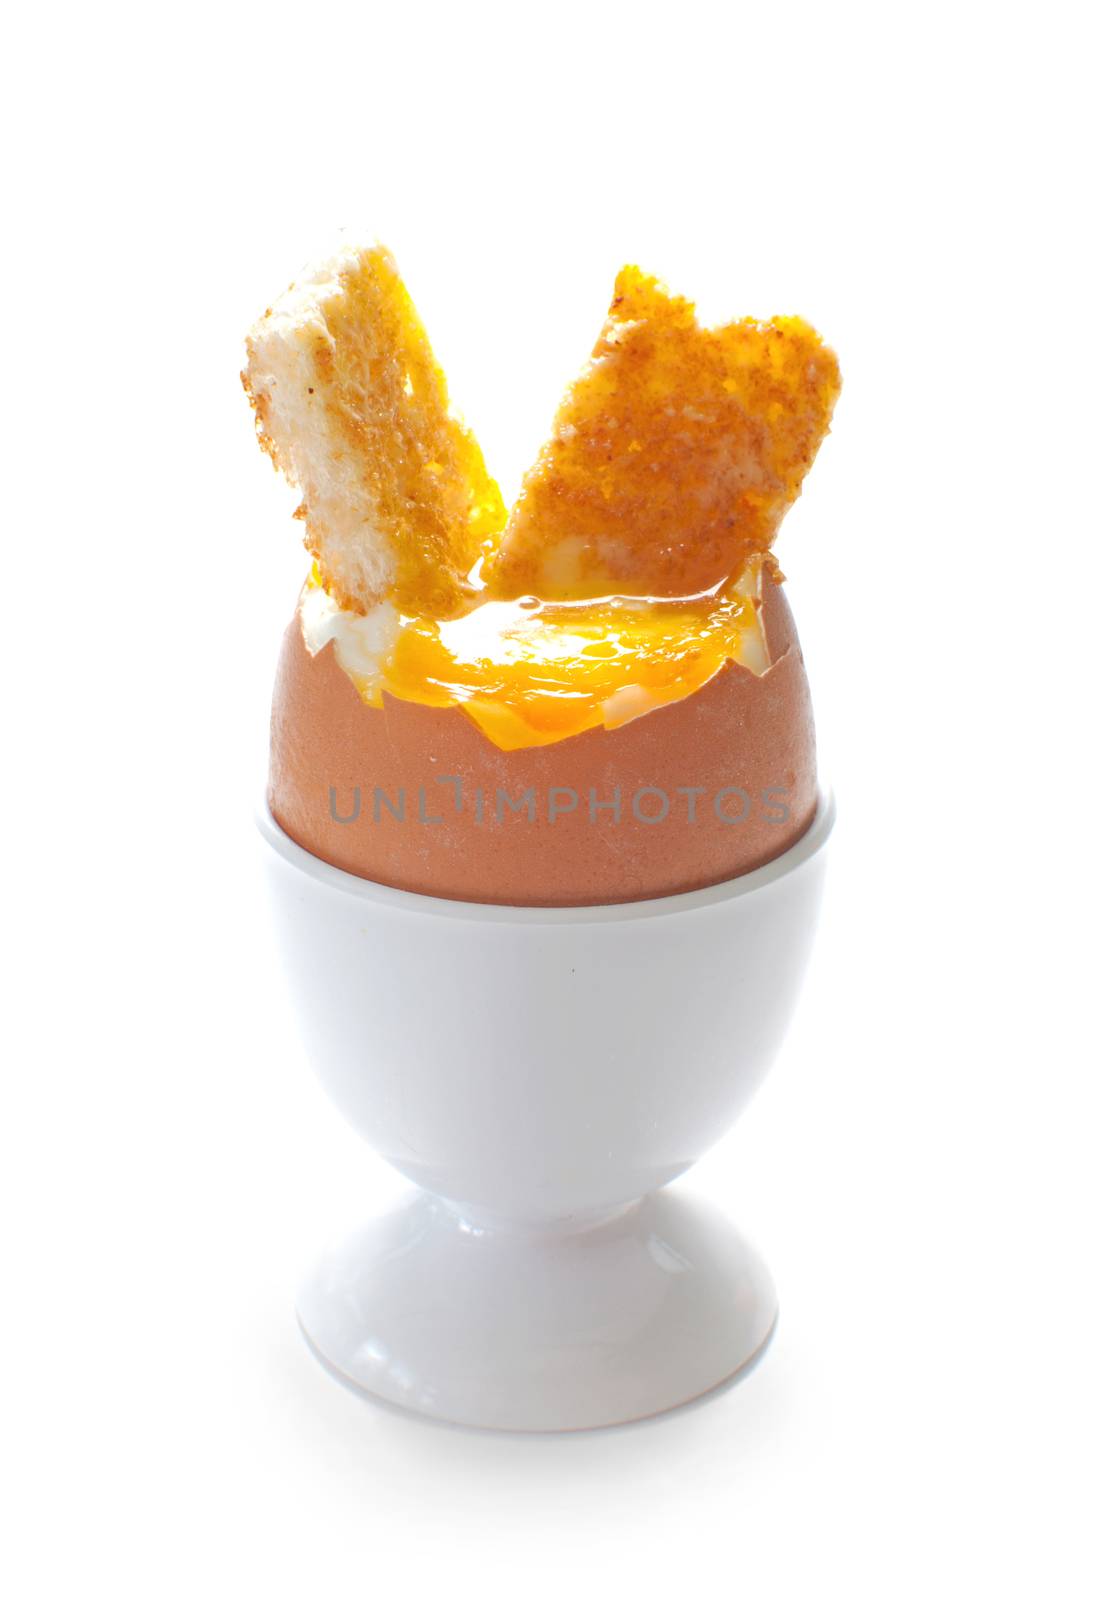 Boiled egg  by unikpix